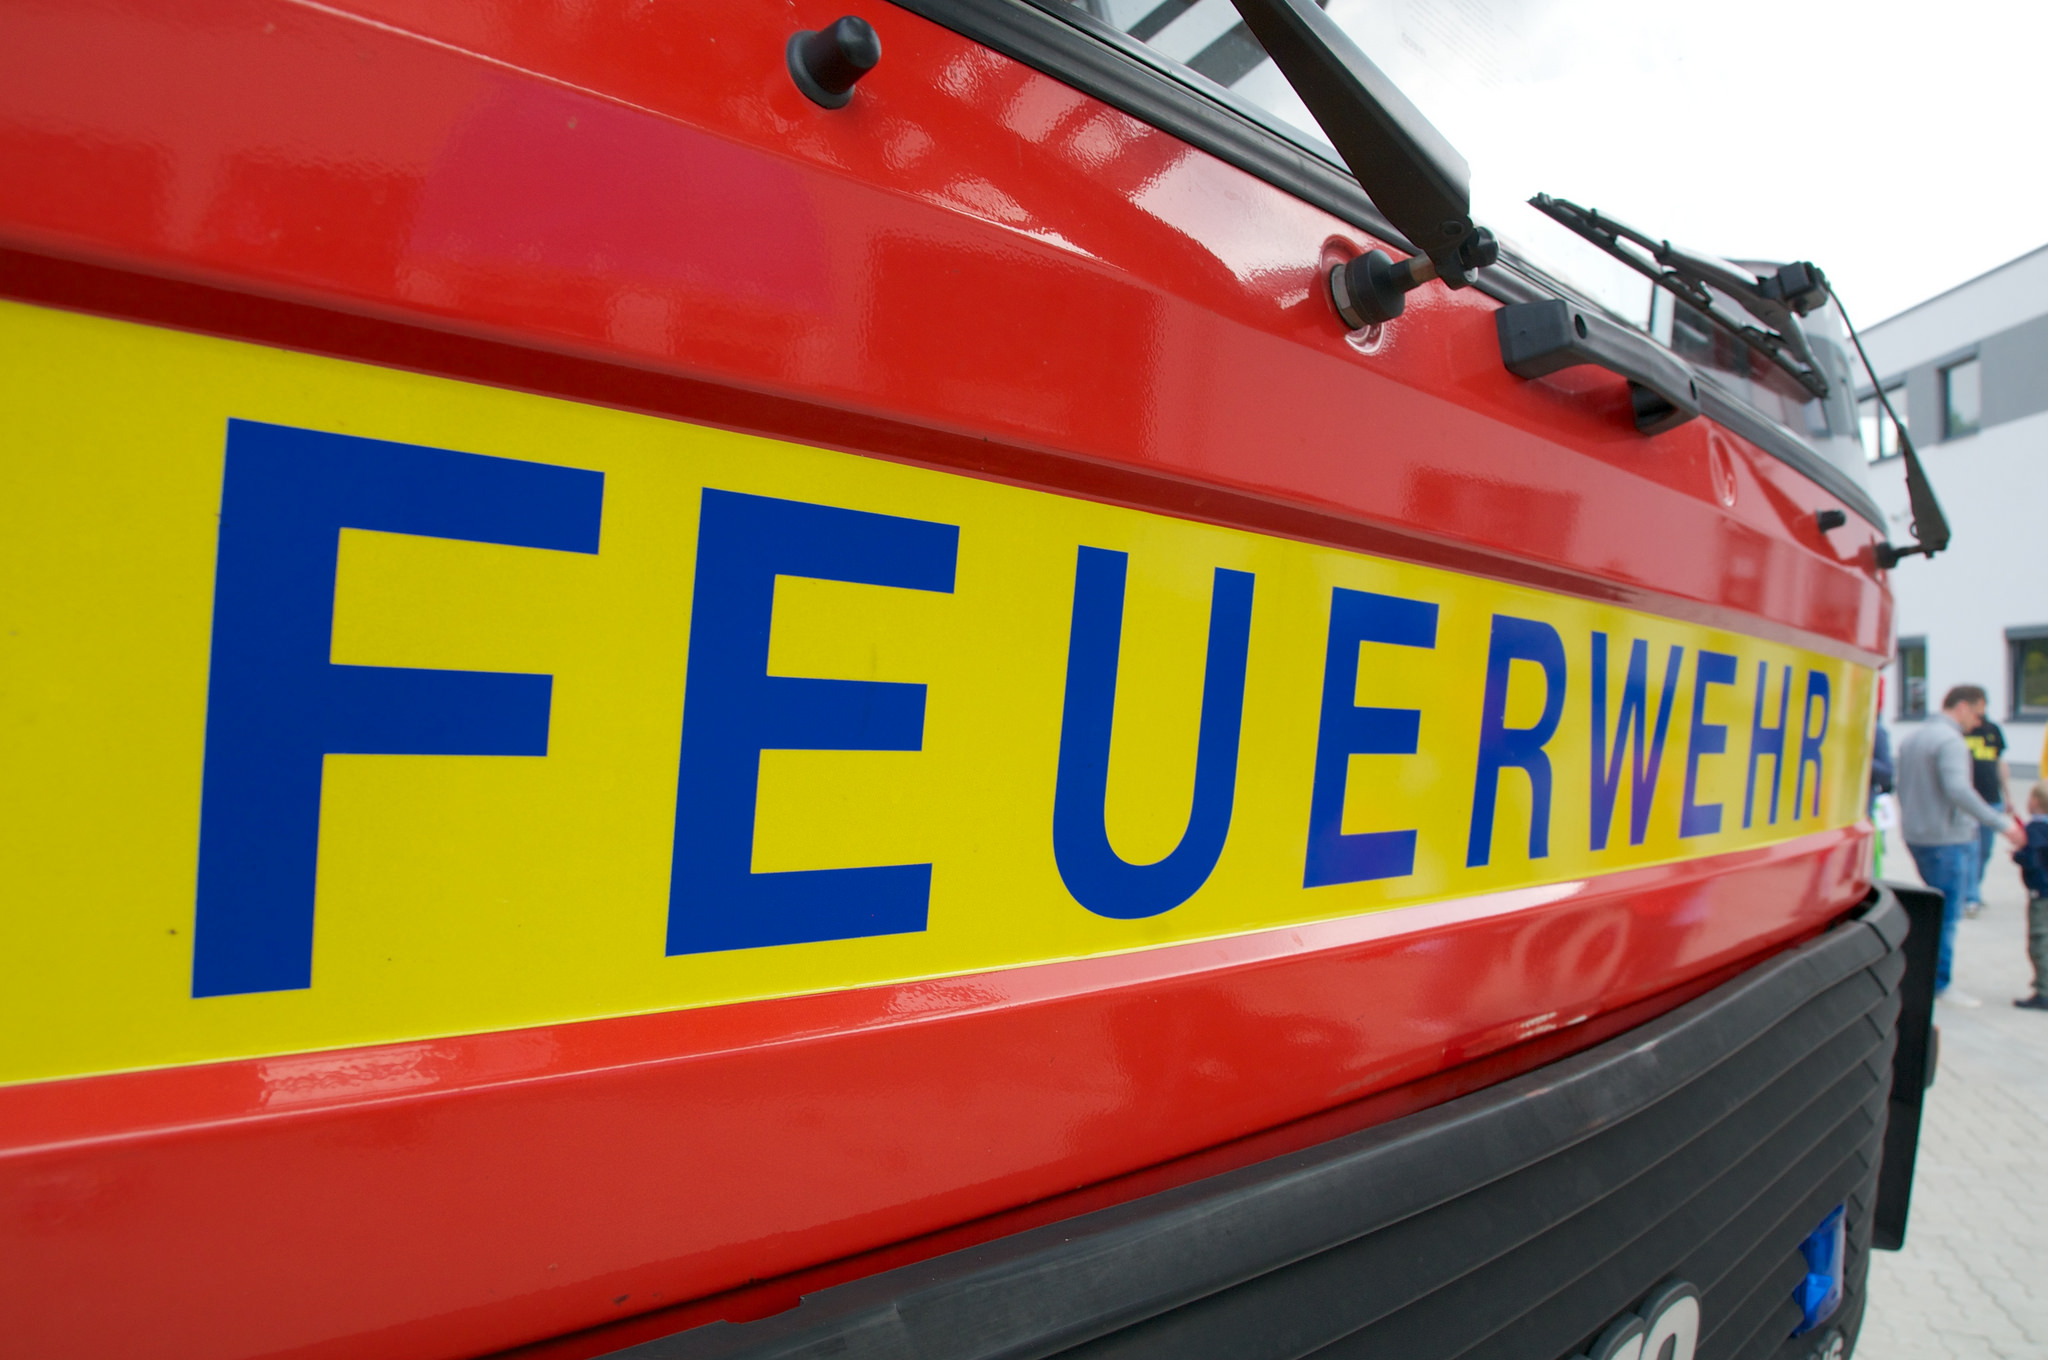 Baden-Württemberg: 41 μαθητές στο νοσοκομείο μετά από διαρροή αερίου στο σχολείο